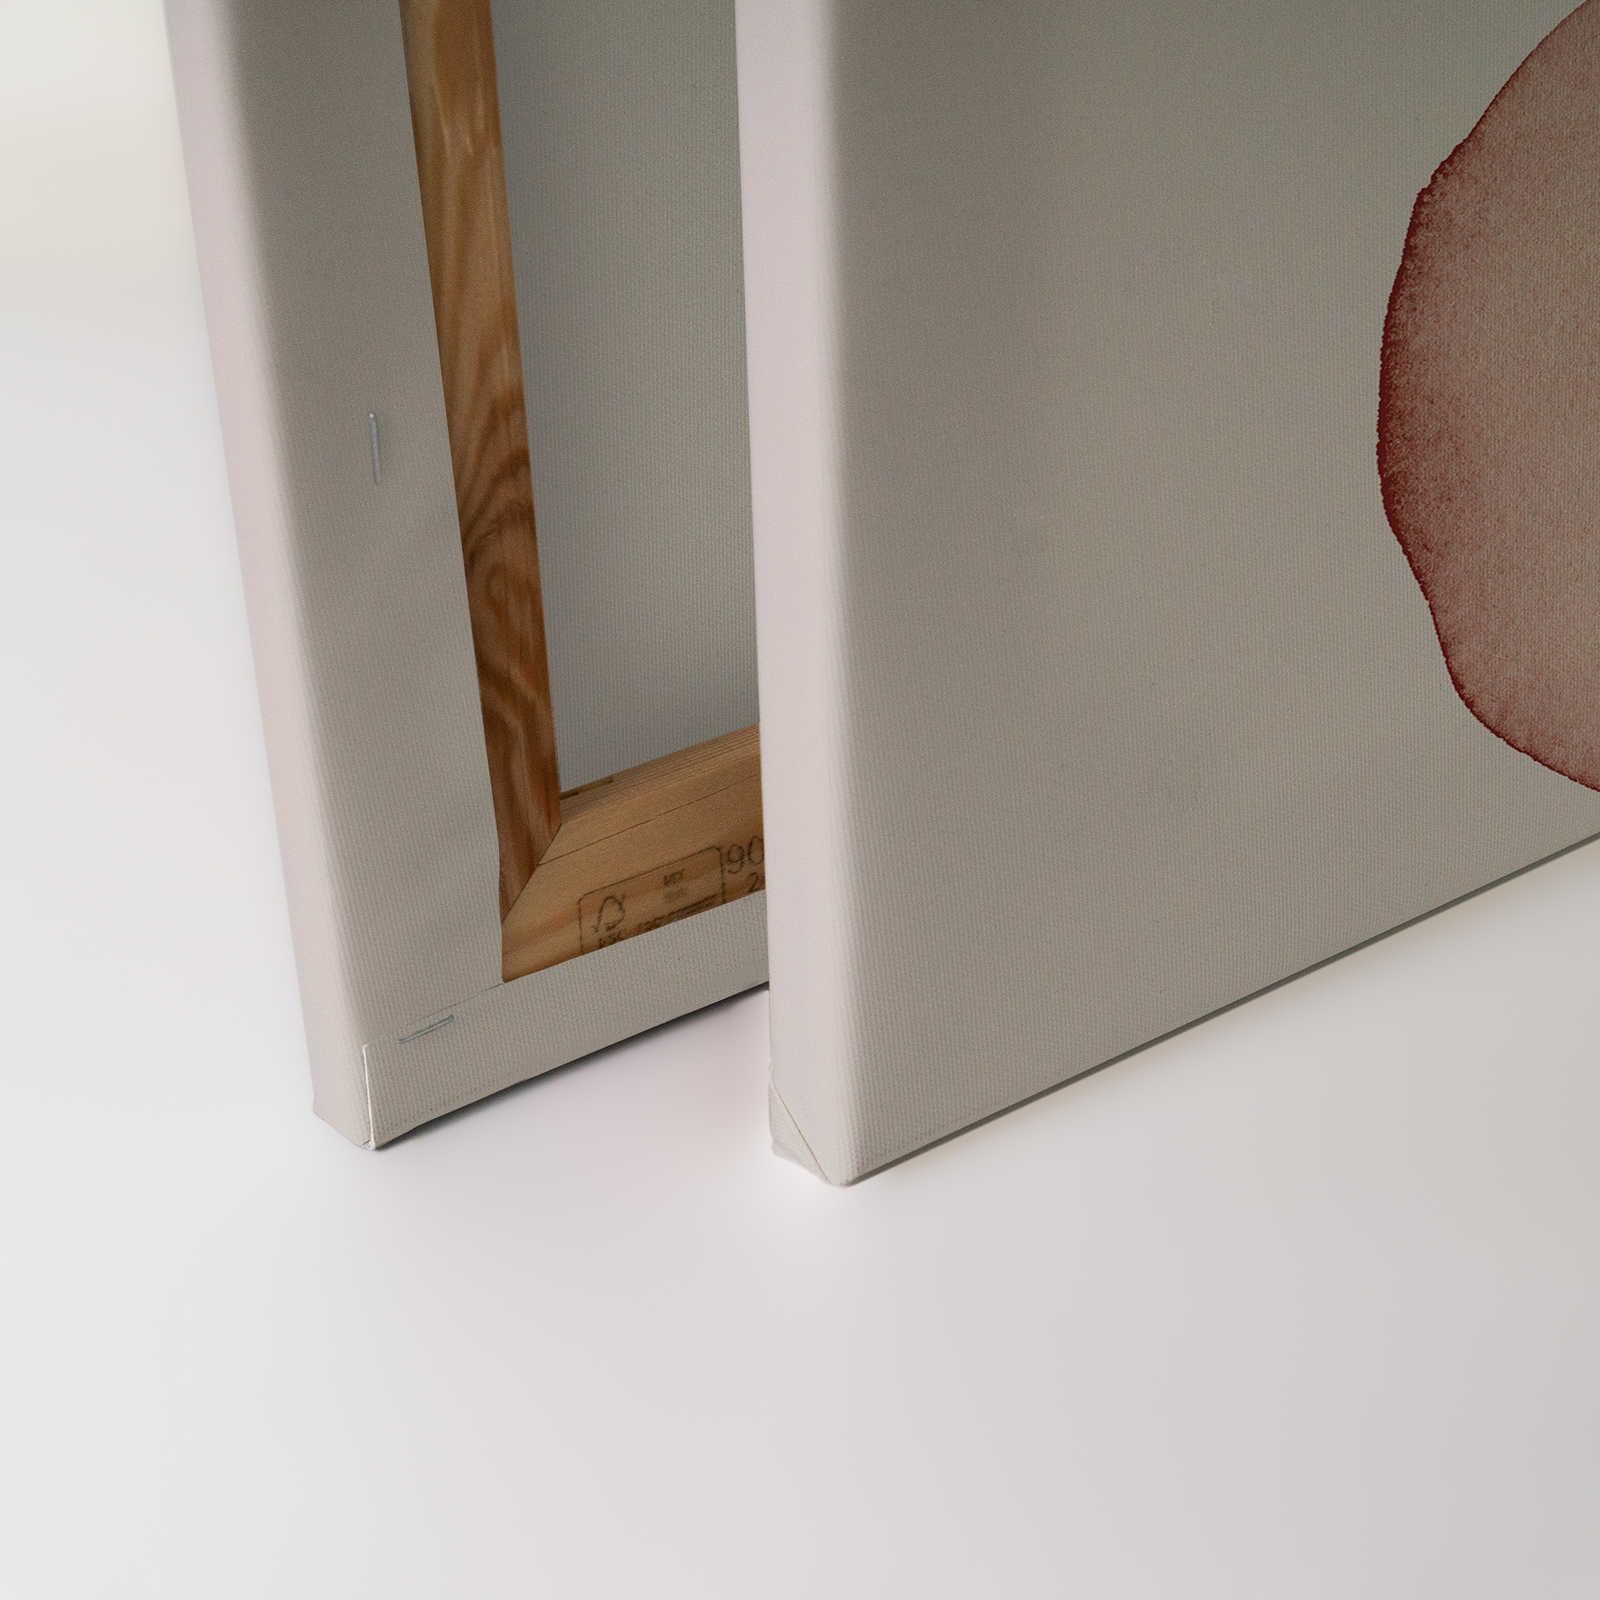             Quadro su tela Acquerello Colore Puntini Design - 0,90 m x 0,60 m
        